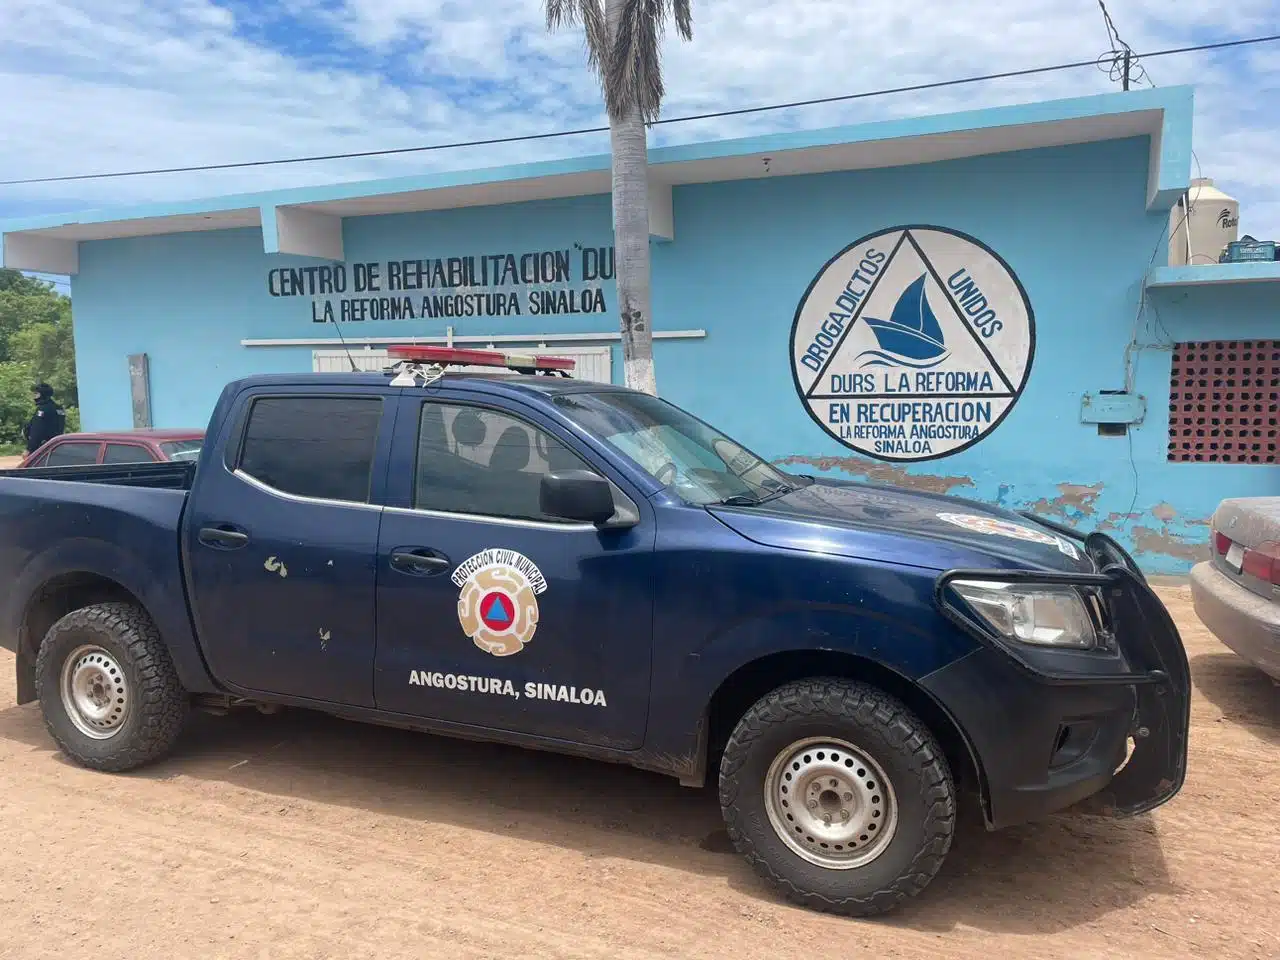 Vehículo de Protección Civil afuera de un centro de rehabilitación en Angostura